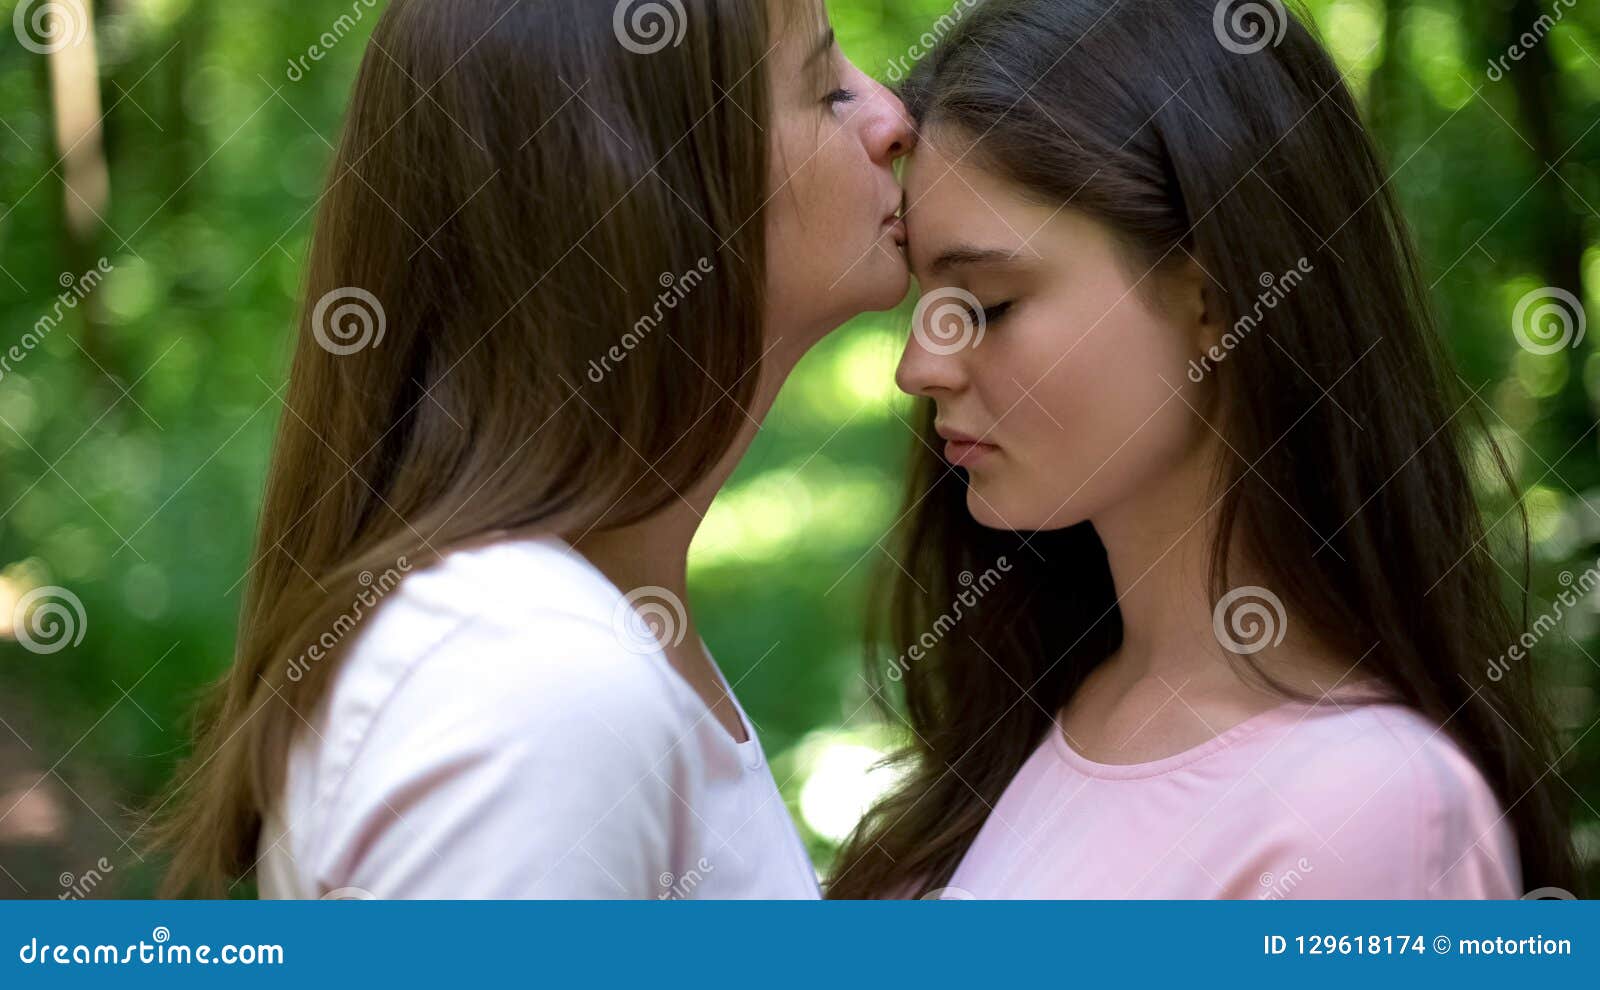 lesbian suck tits selfie